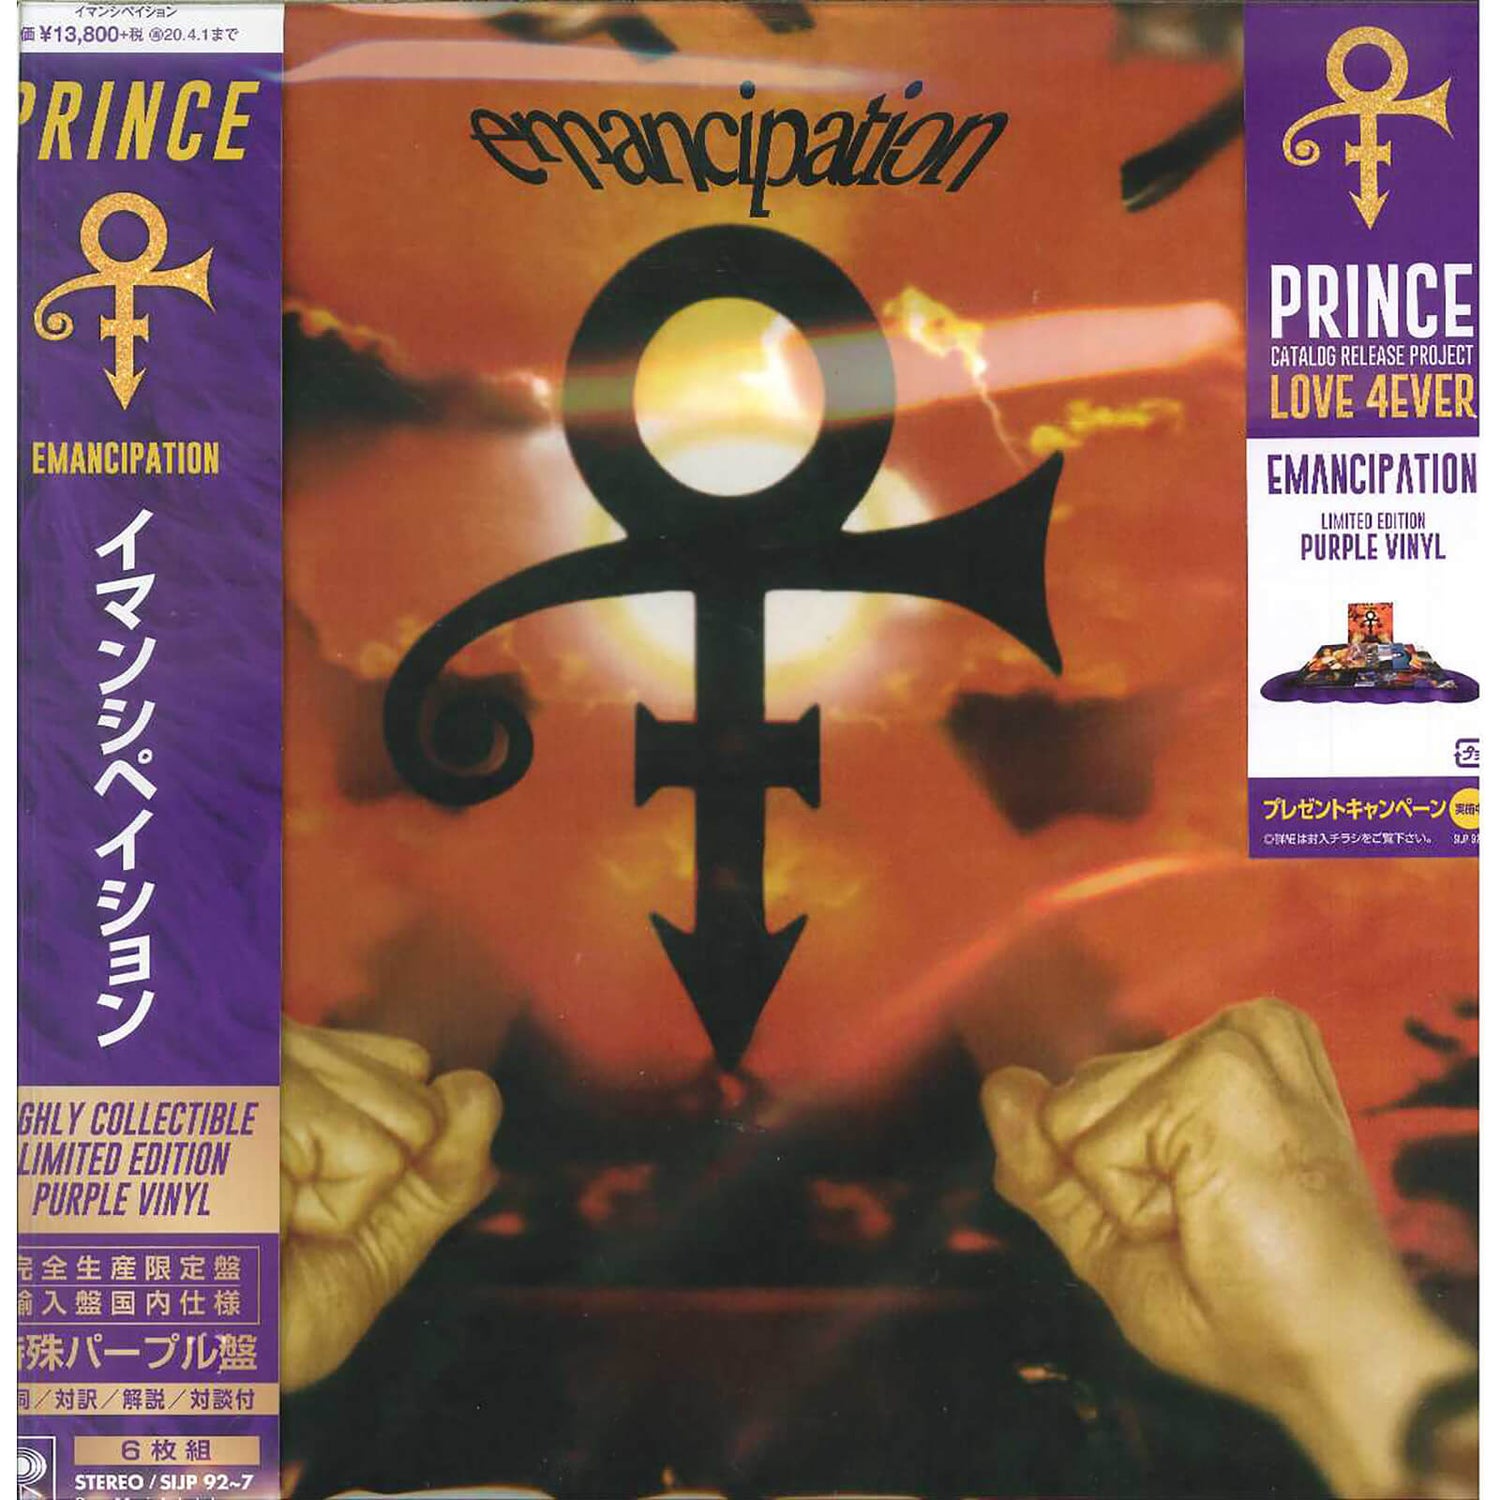 Prince - Emancipation LP Set Japanische Ausgabe